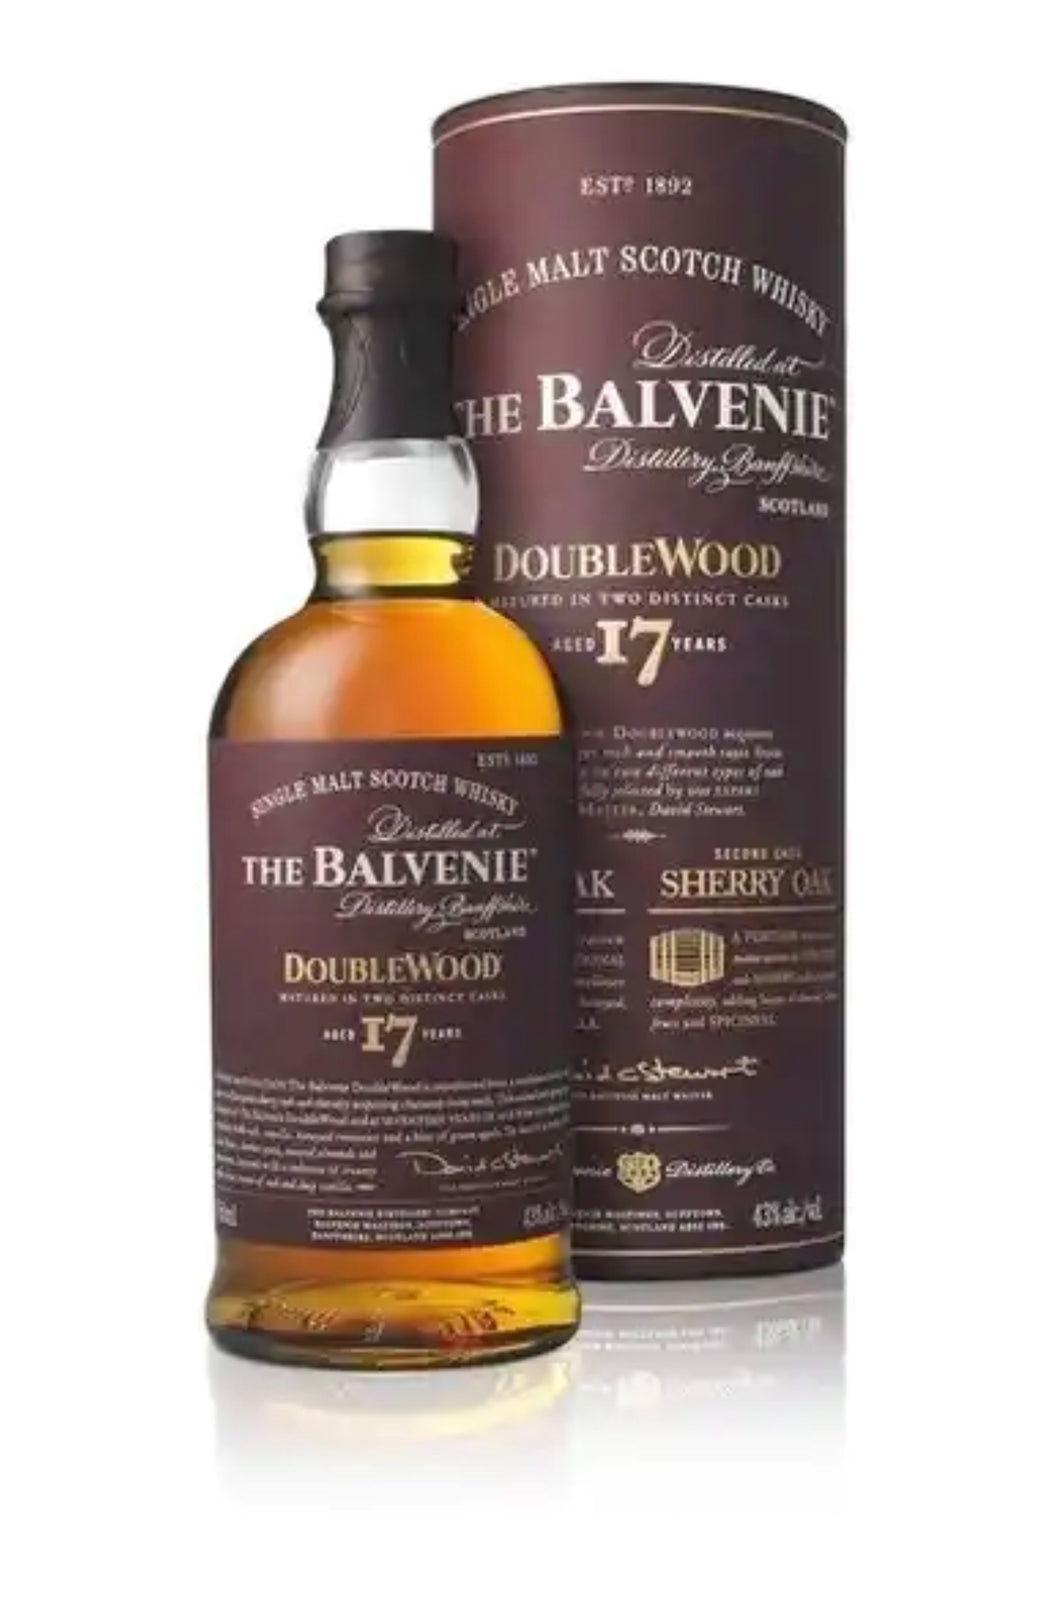 The Balvenie 17 Year Old Doublewood Scotch